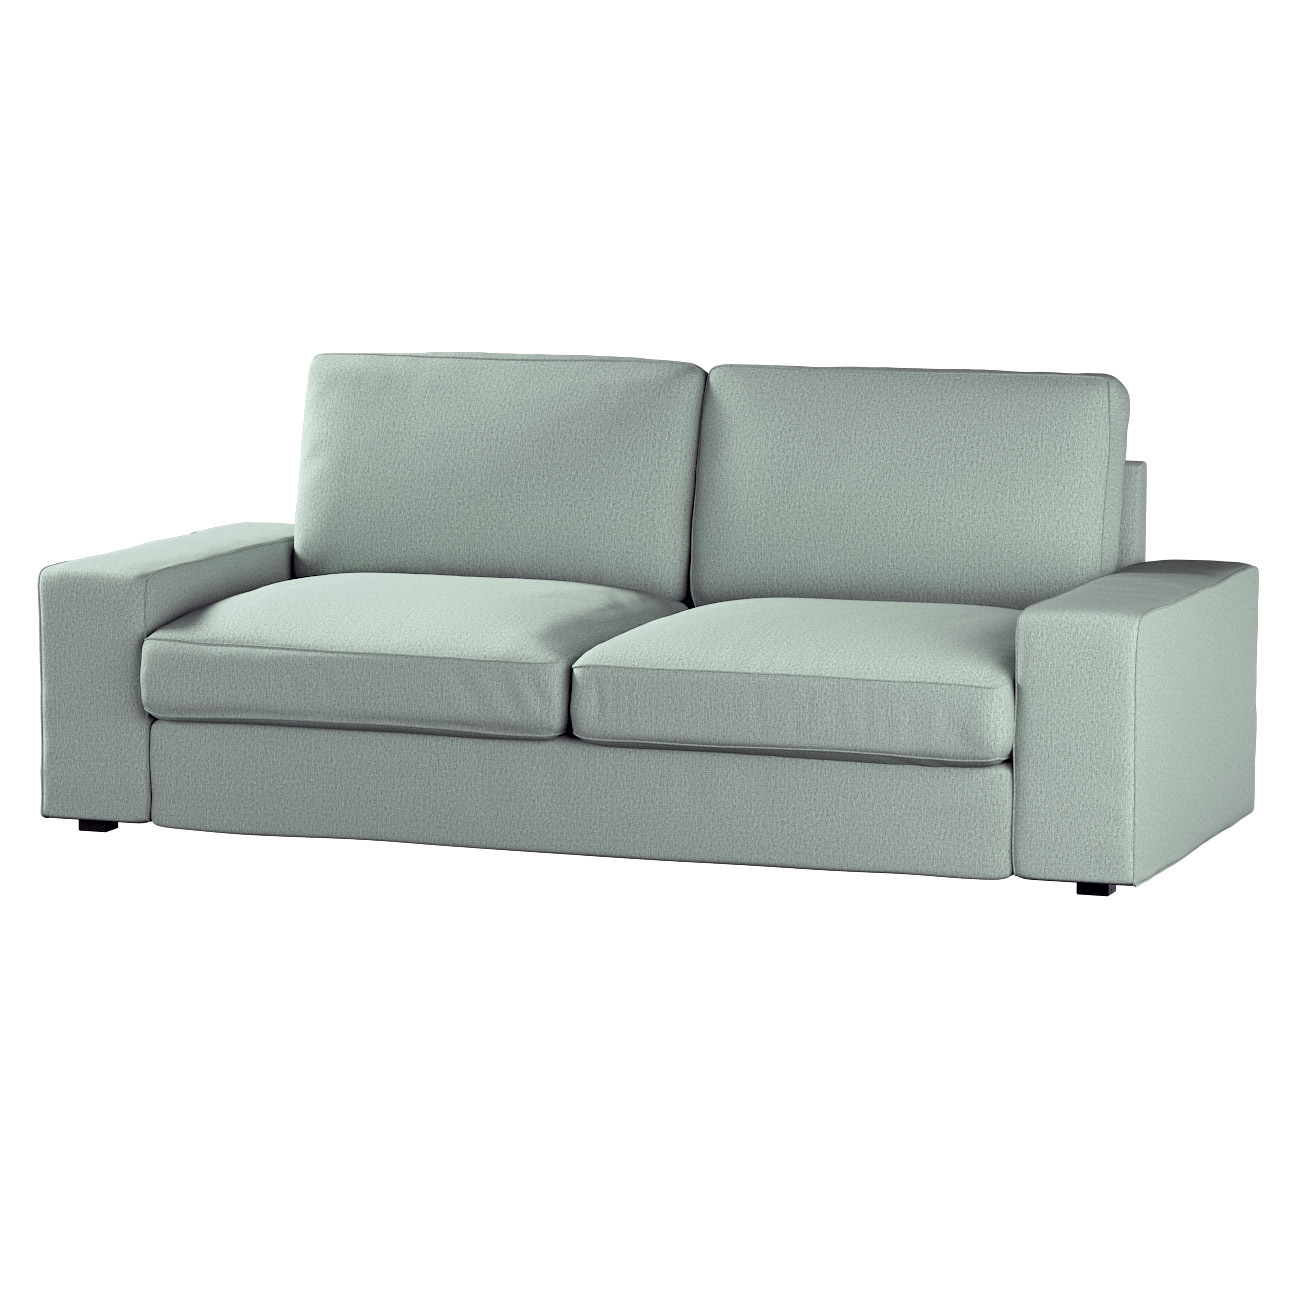 Bezug für Kivik 3-Sitzer Sofa, eukalyptusgrün, Bezug für Sofa Kivik 3-Sitze günstig online kaufen